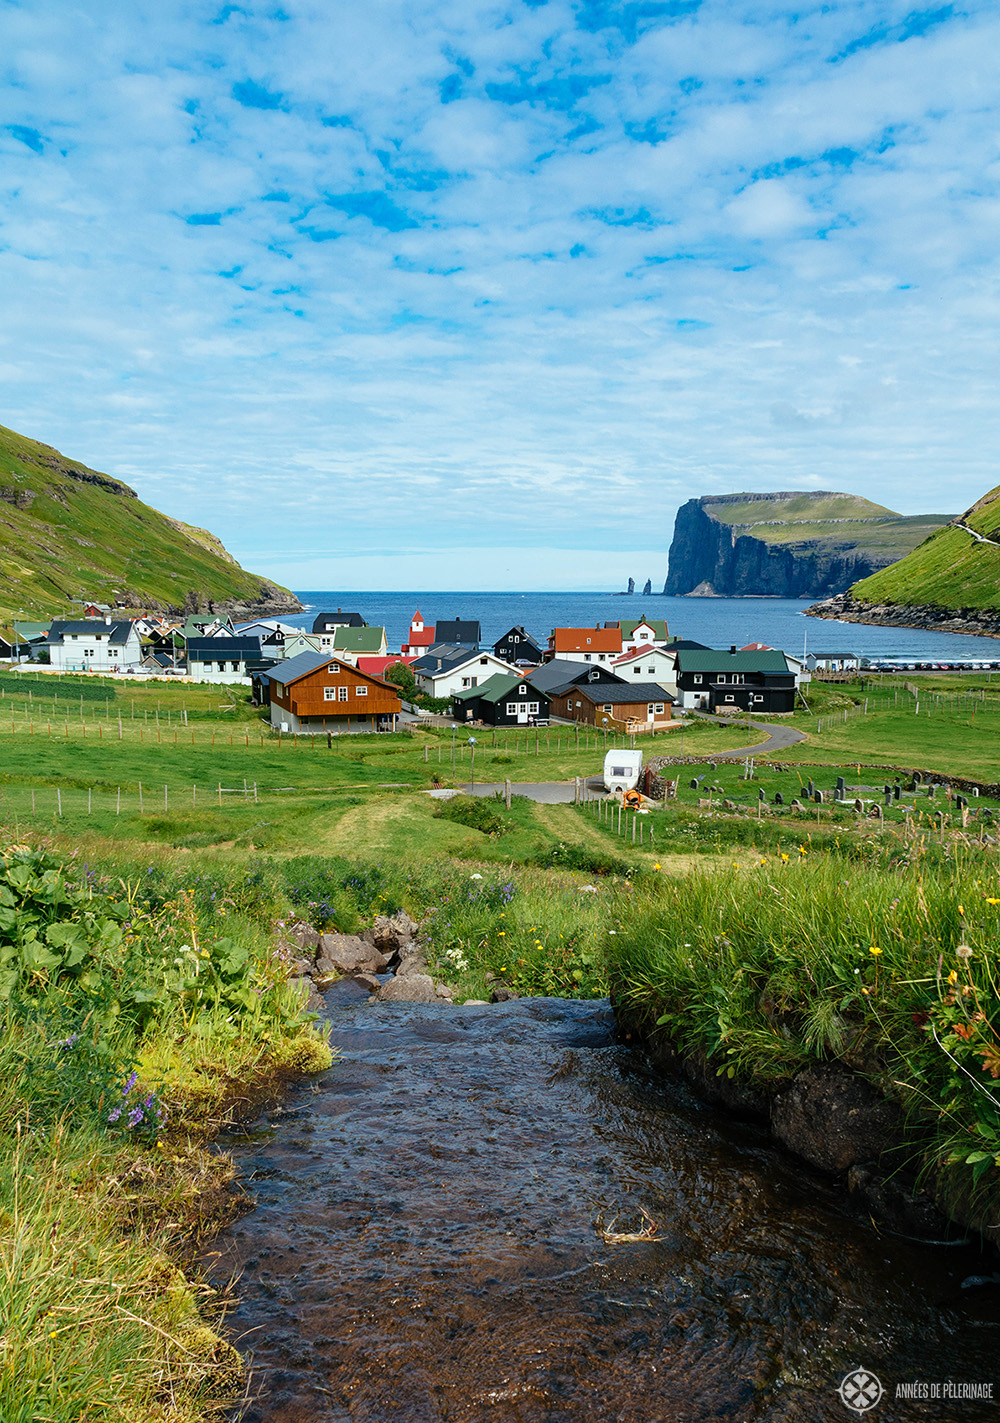 THe tiny Tjørnuvík village in the Faroe Islands